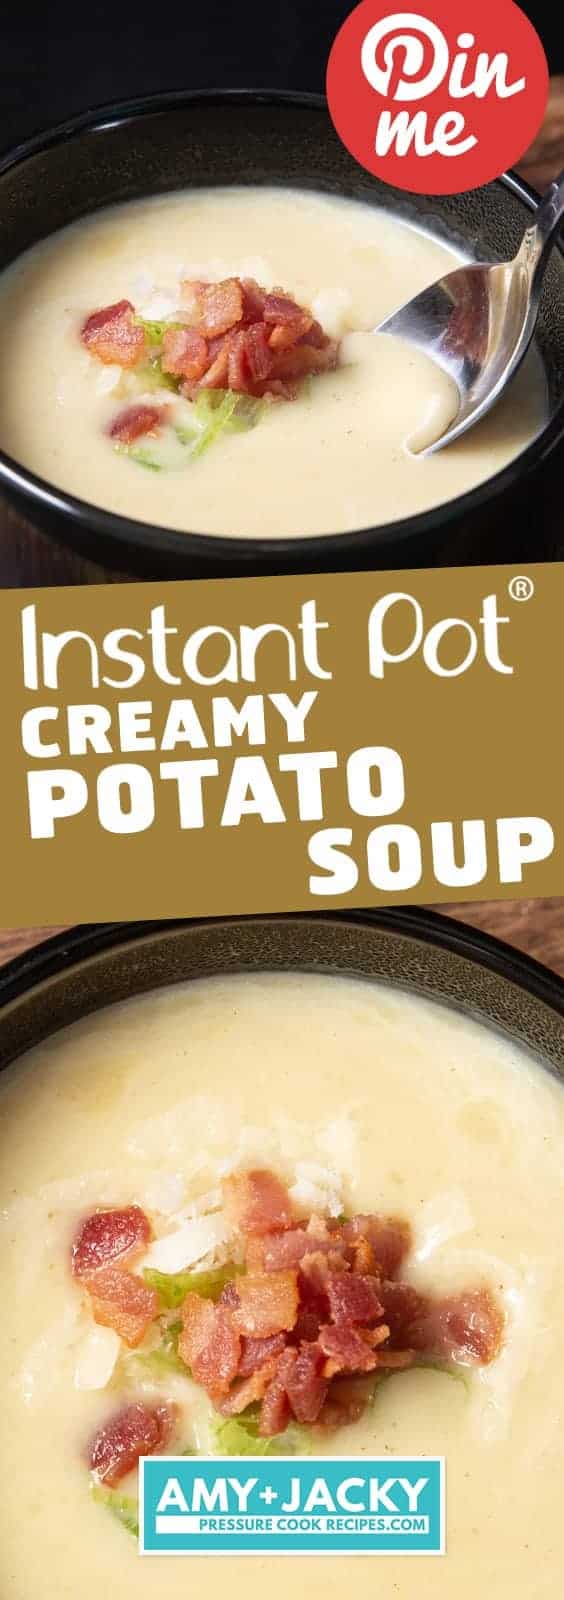 Instant Pot Potato Soup | Pressure Cooker Potato Soup | Easy Potato Soup | Loaded Potato Soup | Instant Pot Soup | Instant Pot Potatoes | Instant Pot Recipes | Pressure Cooker Recipes #instantpot #pressurecooker #soup #recipes #potatoes